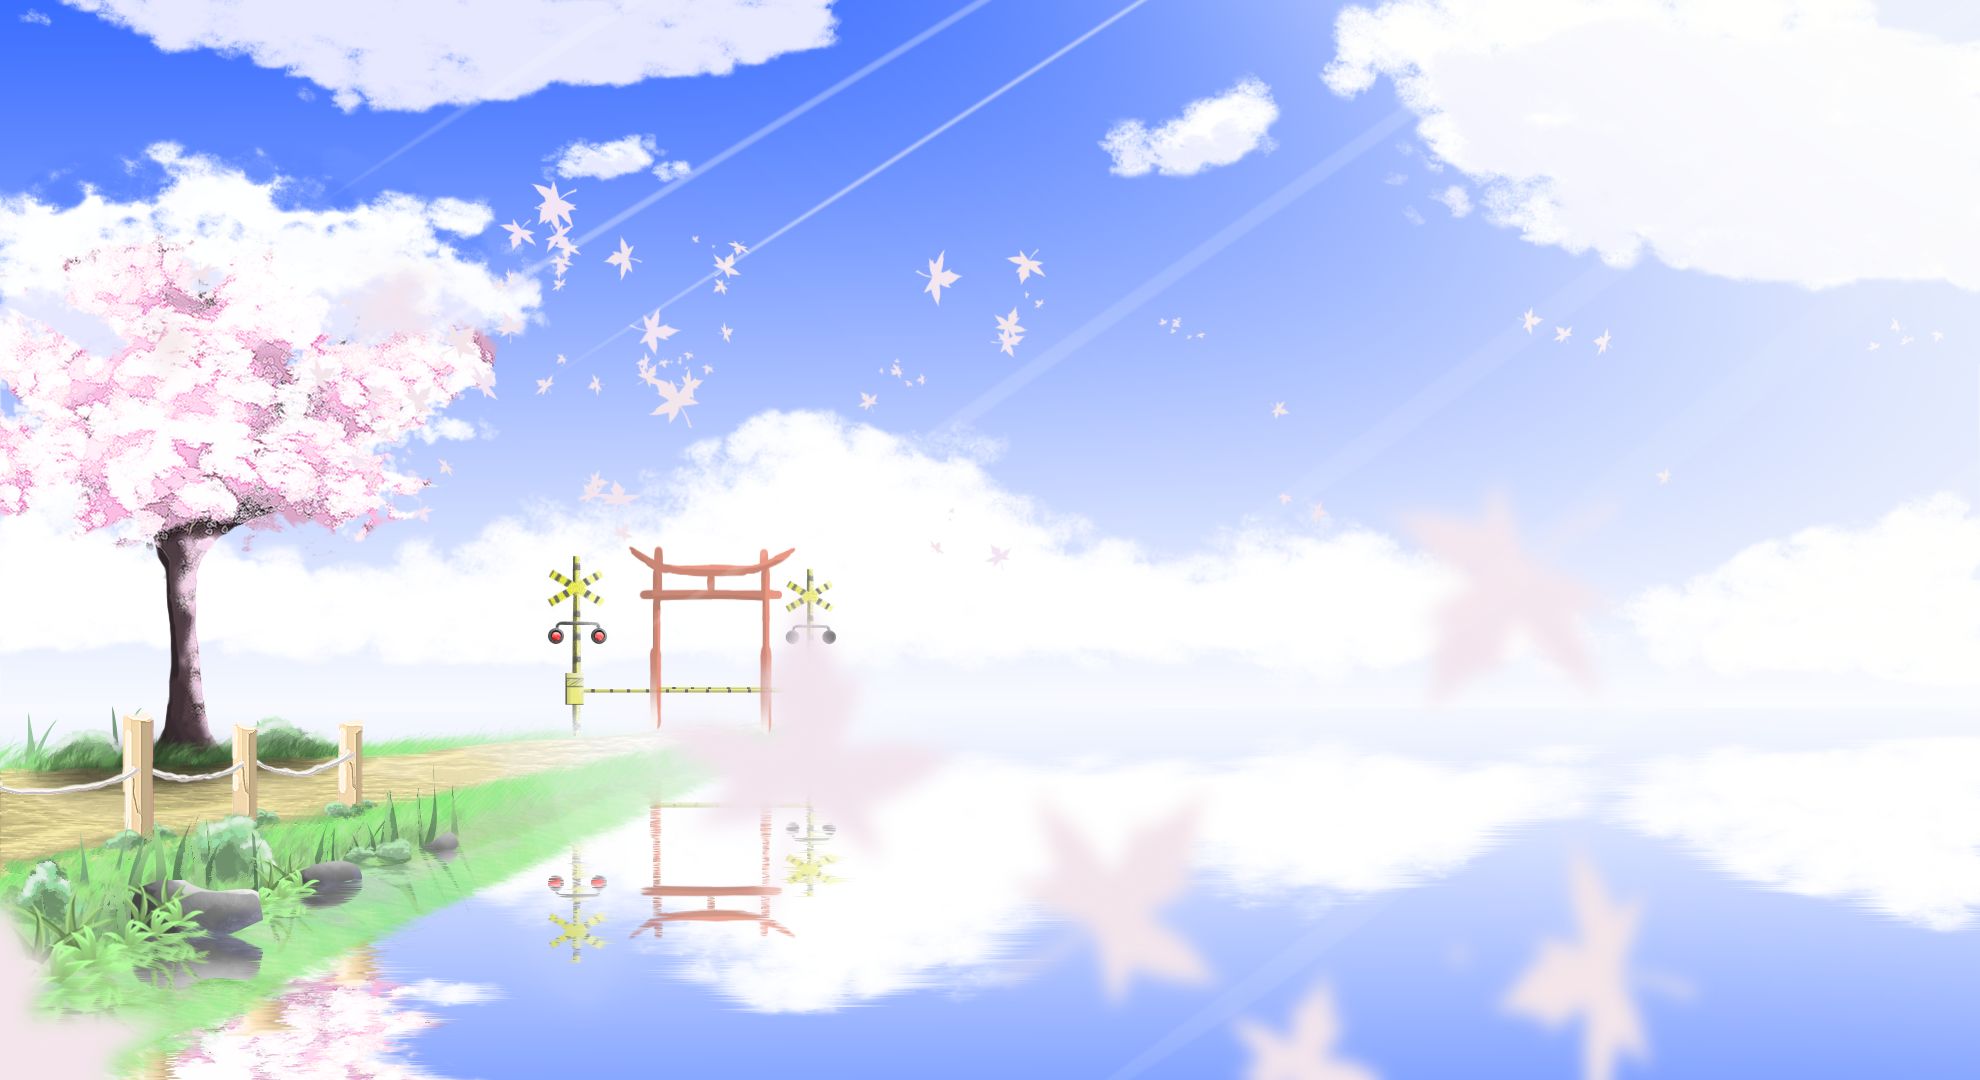 Fantasy Garden - Other & Anime Background Wallpapers on Desktop Nexus  (Image 2205482)